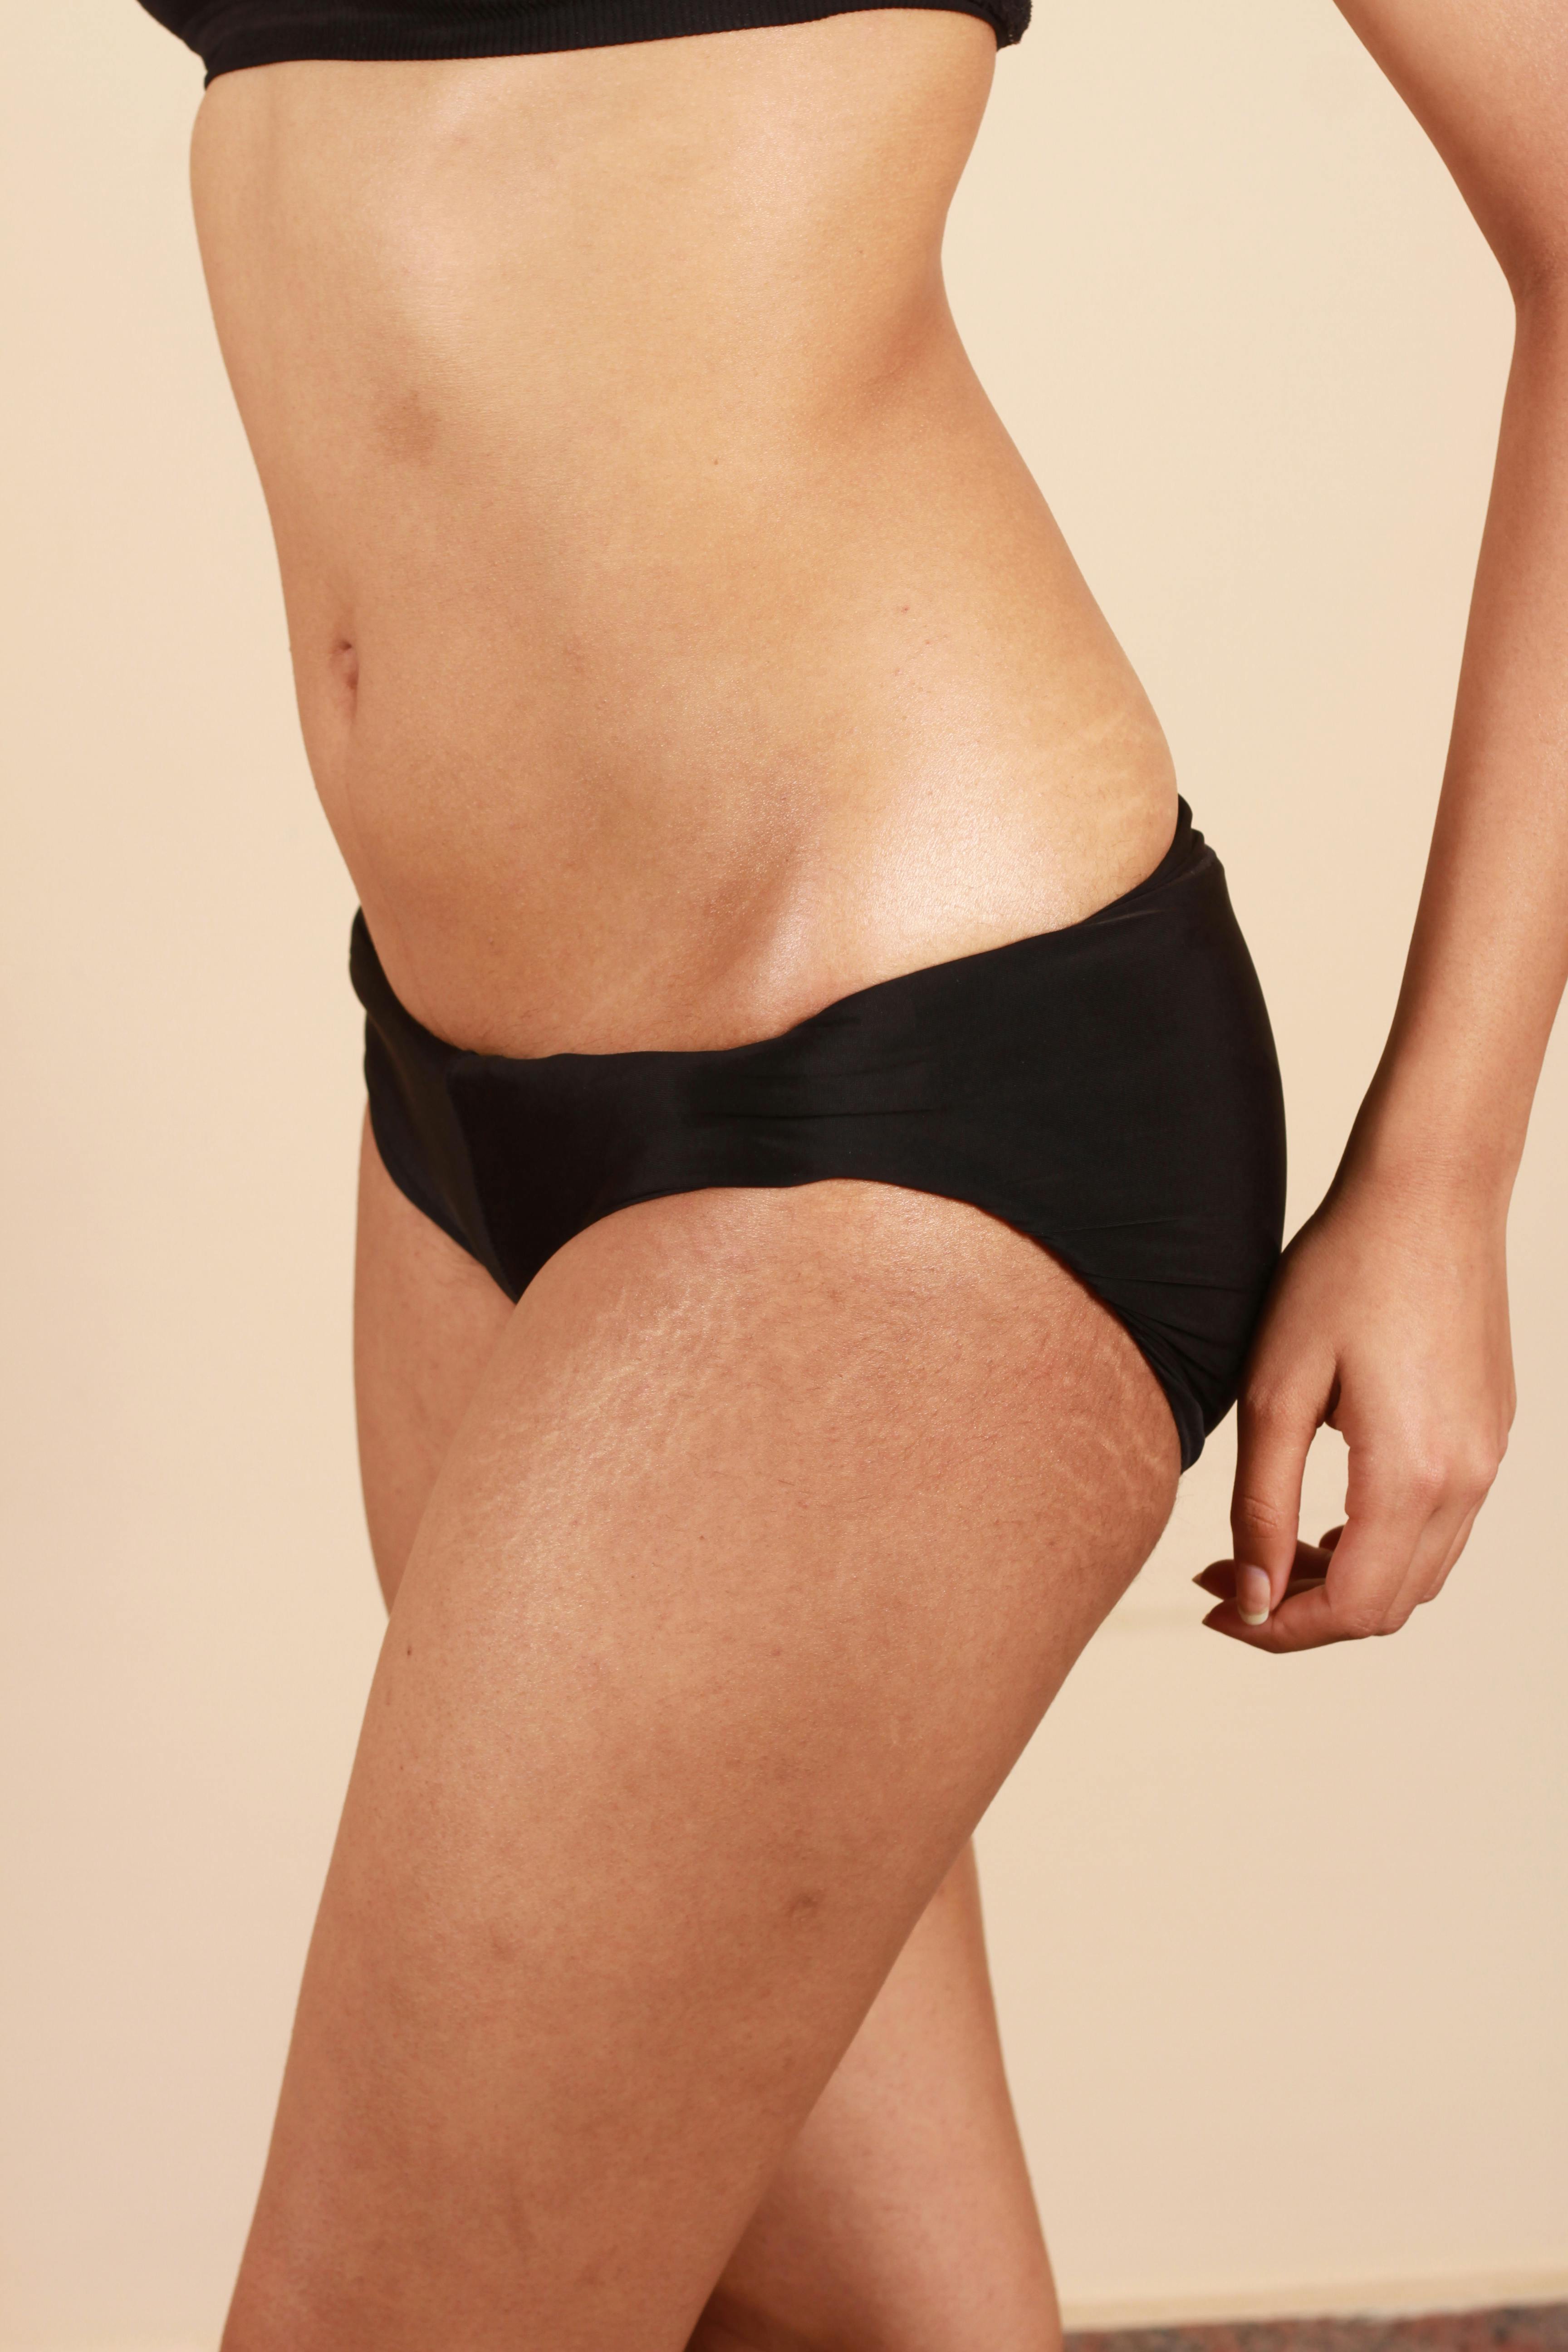 Woman in Skintone Underwear · Free Stock Photo